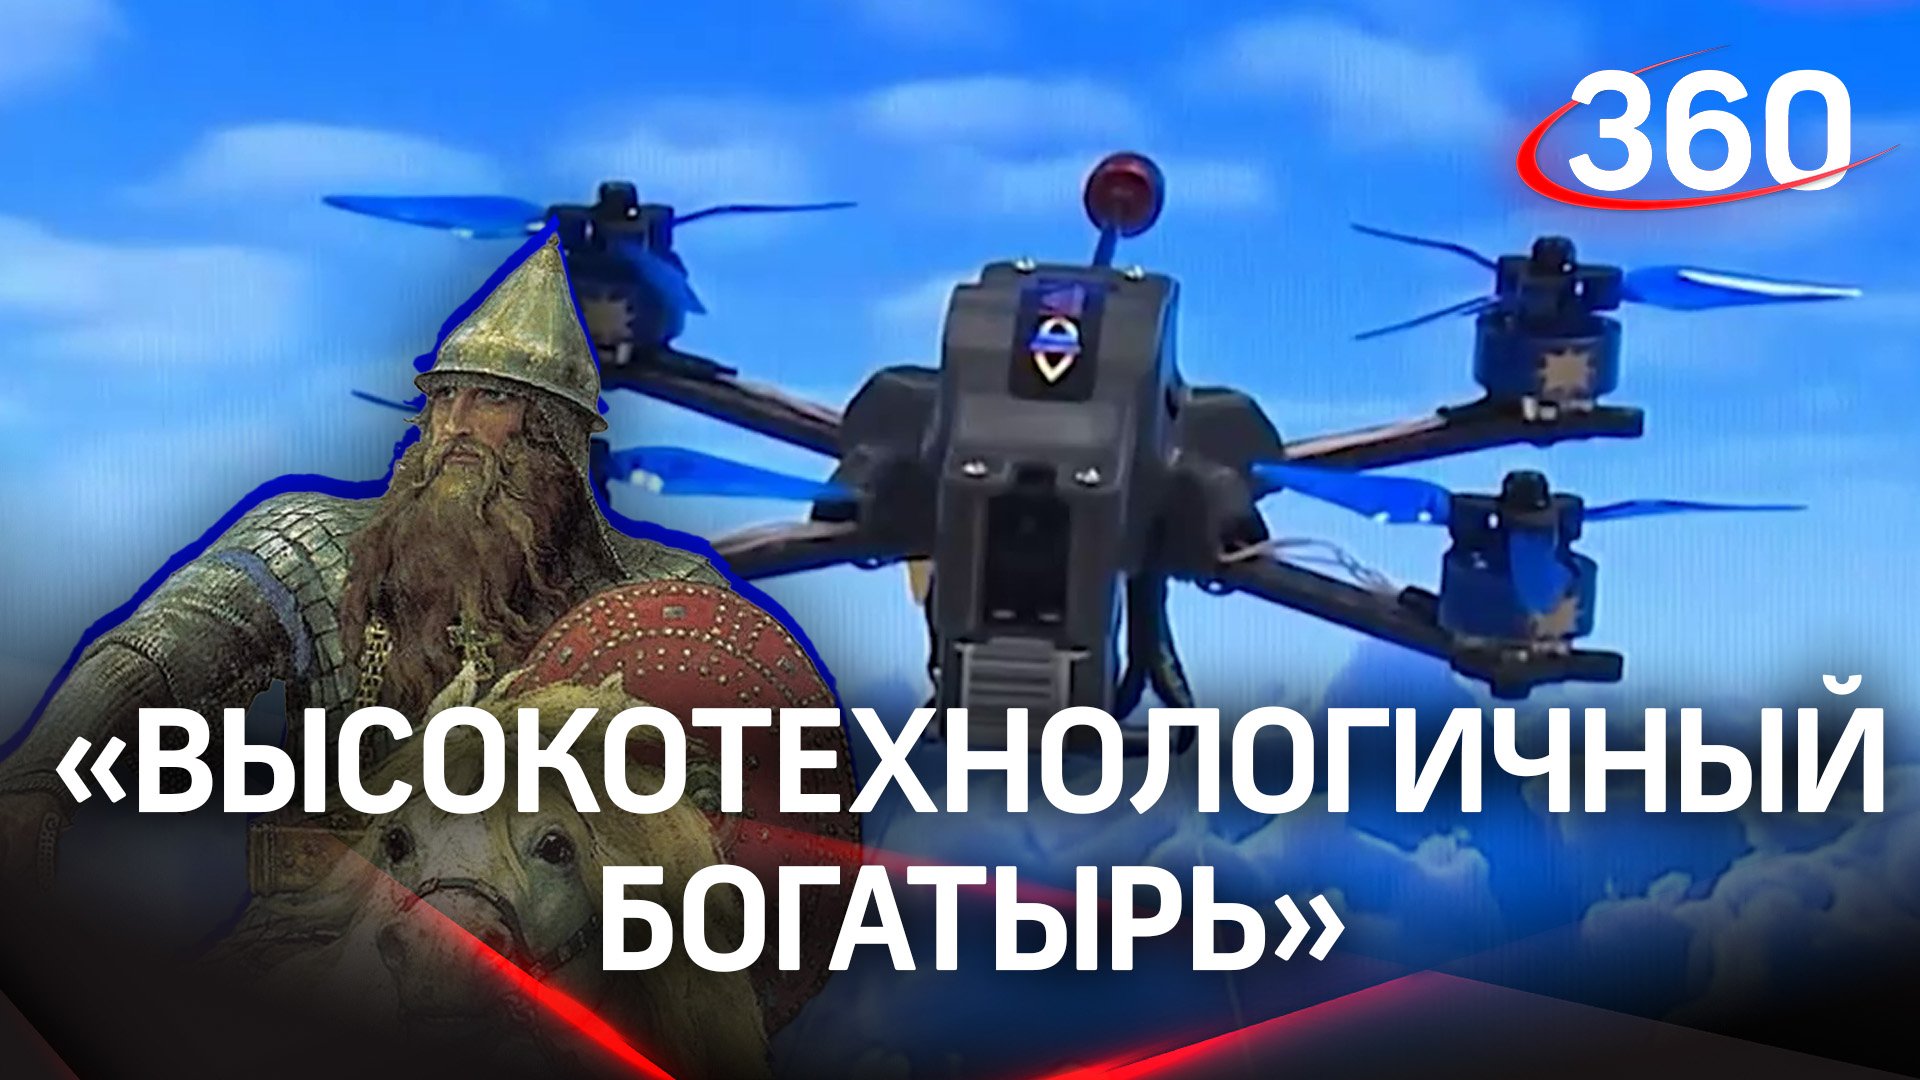 Добрыня» - что за русский квадрокоптер?